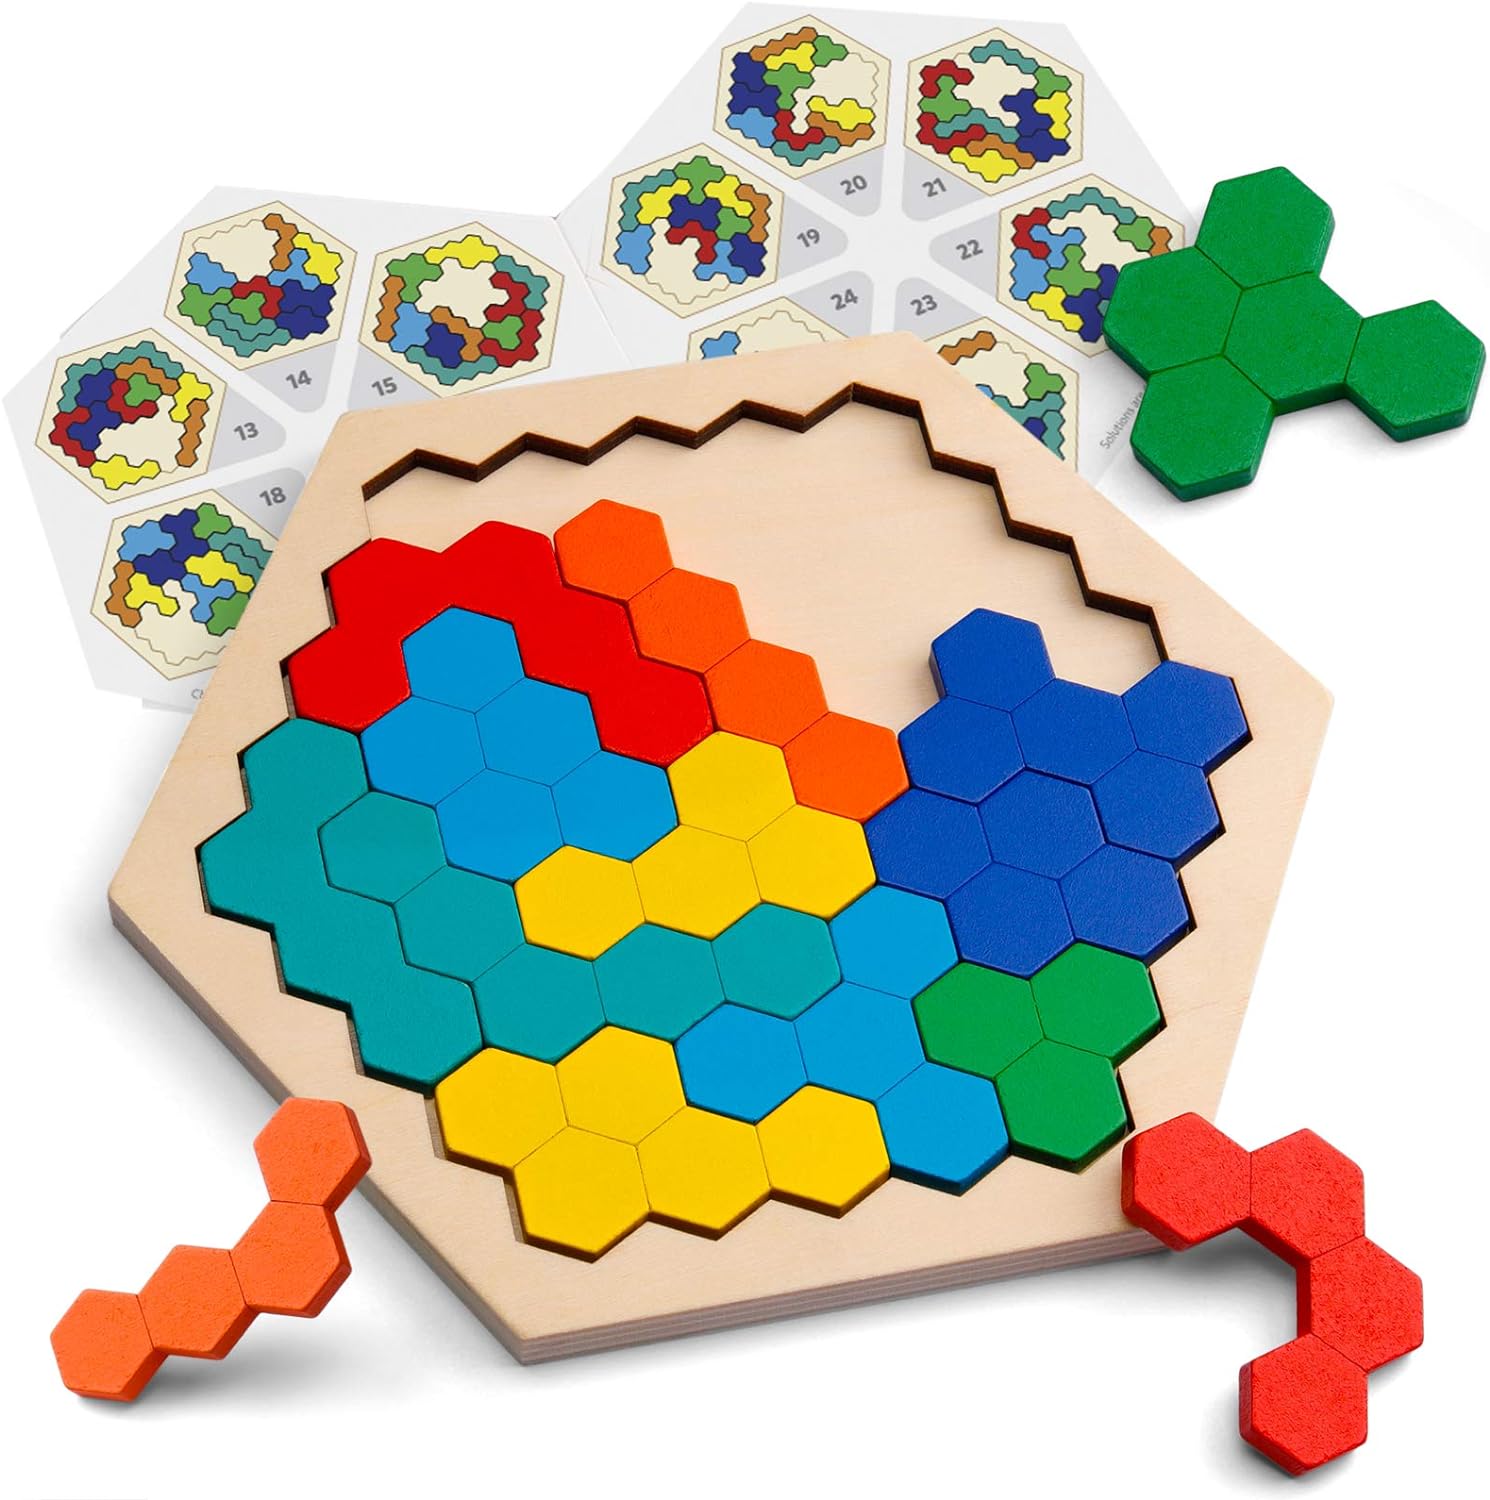 Kid Intelligence IQ Brain Teaser Game Memory Game Logical Training Fun Toy Game